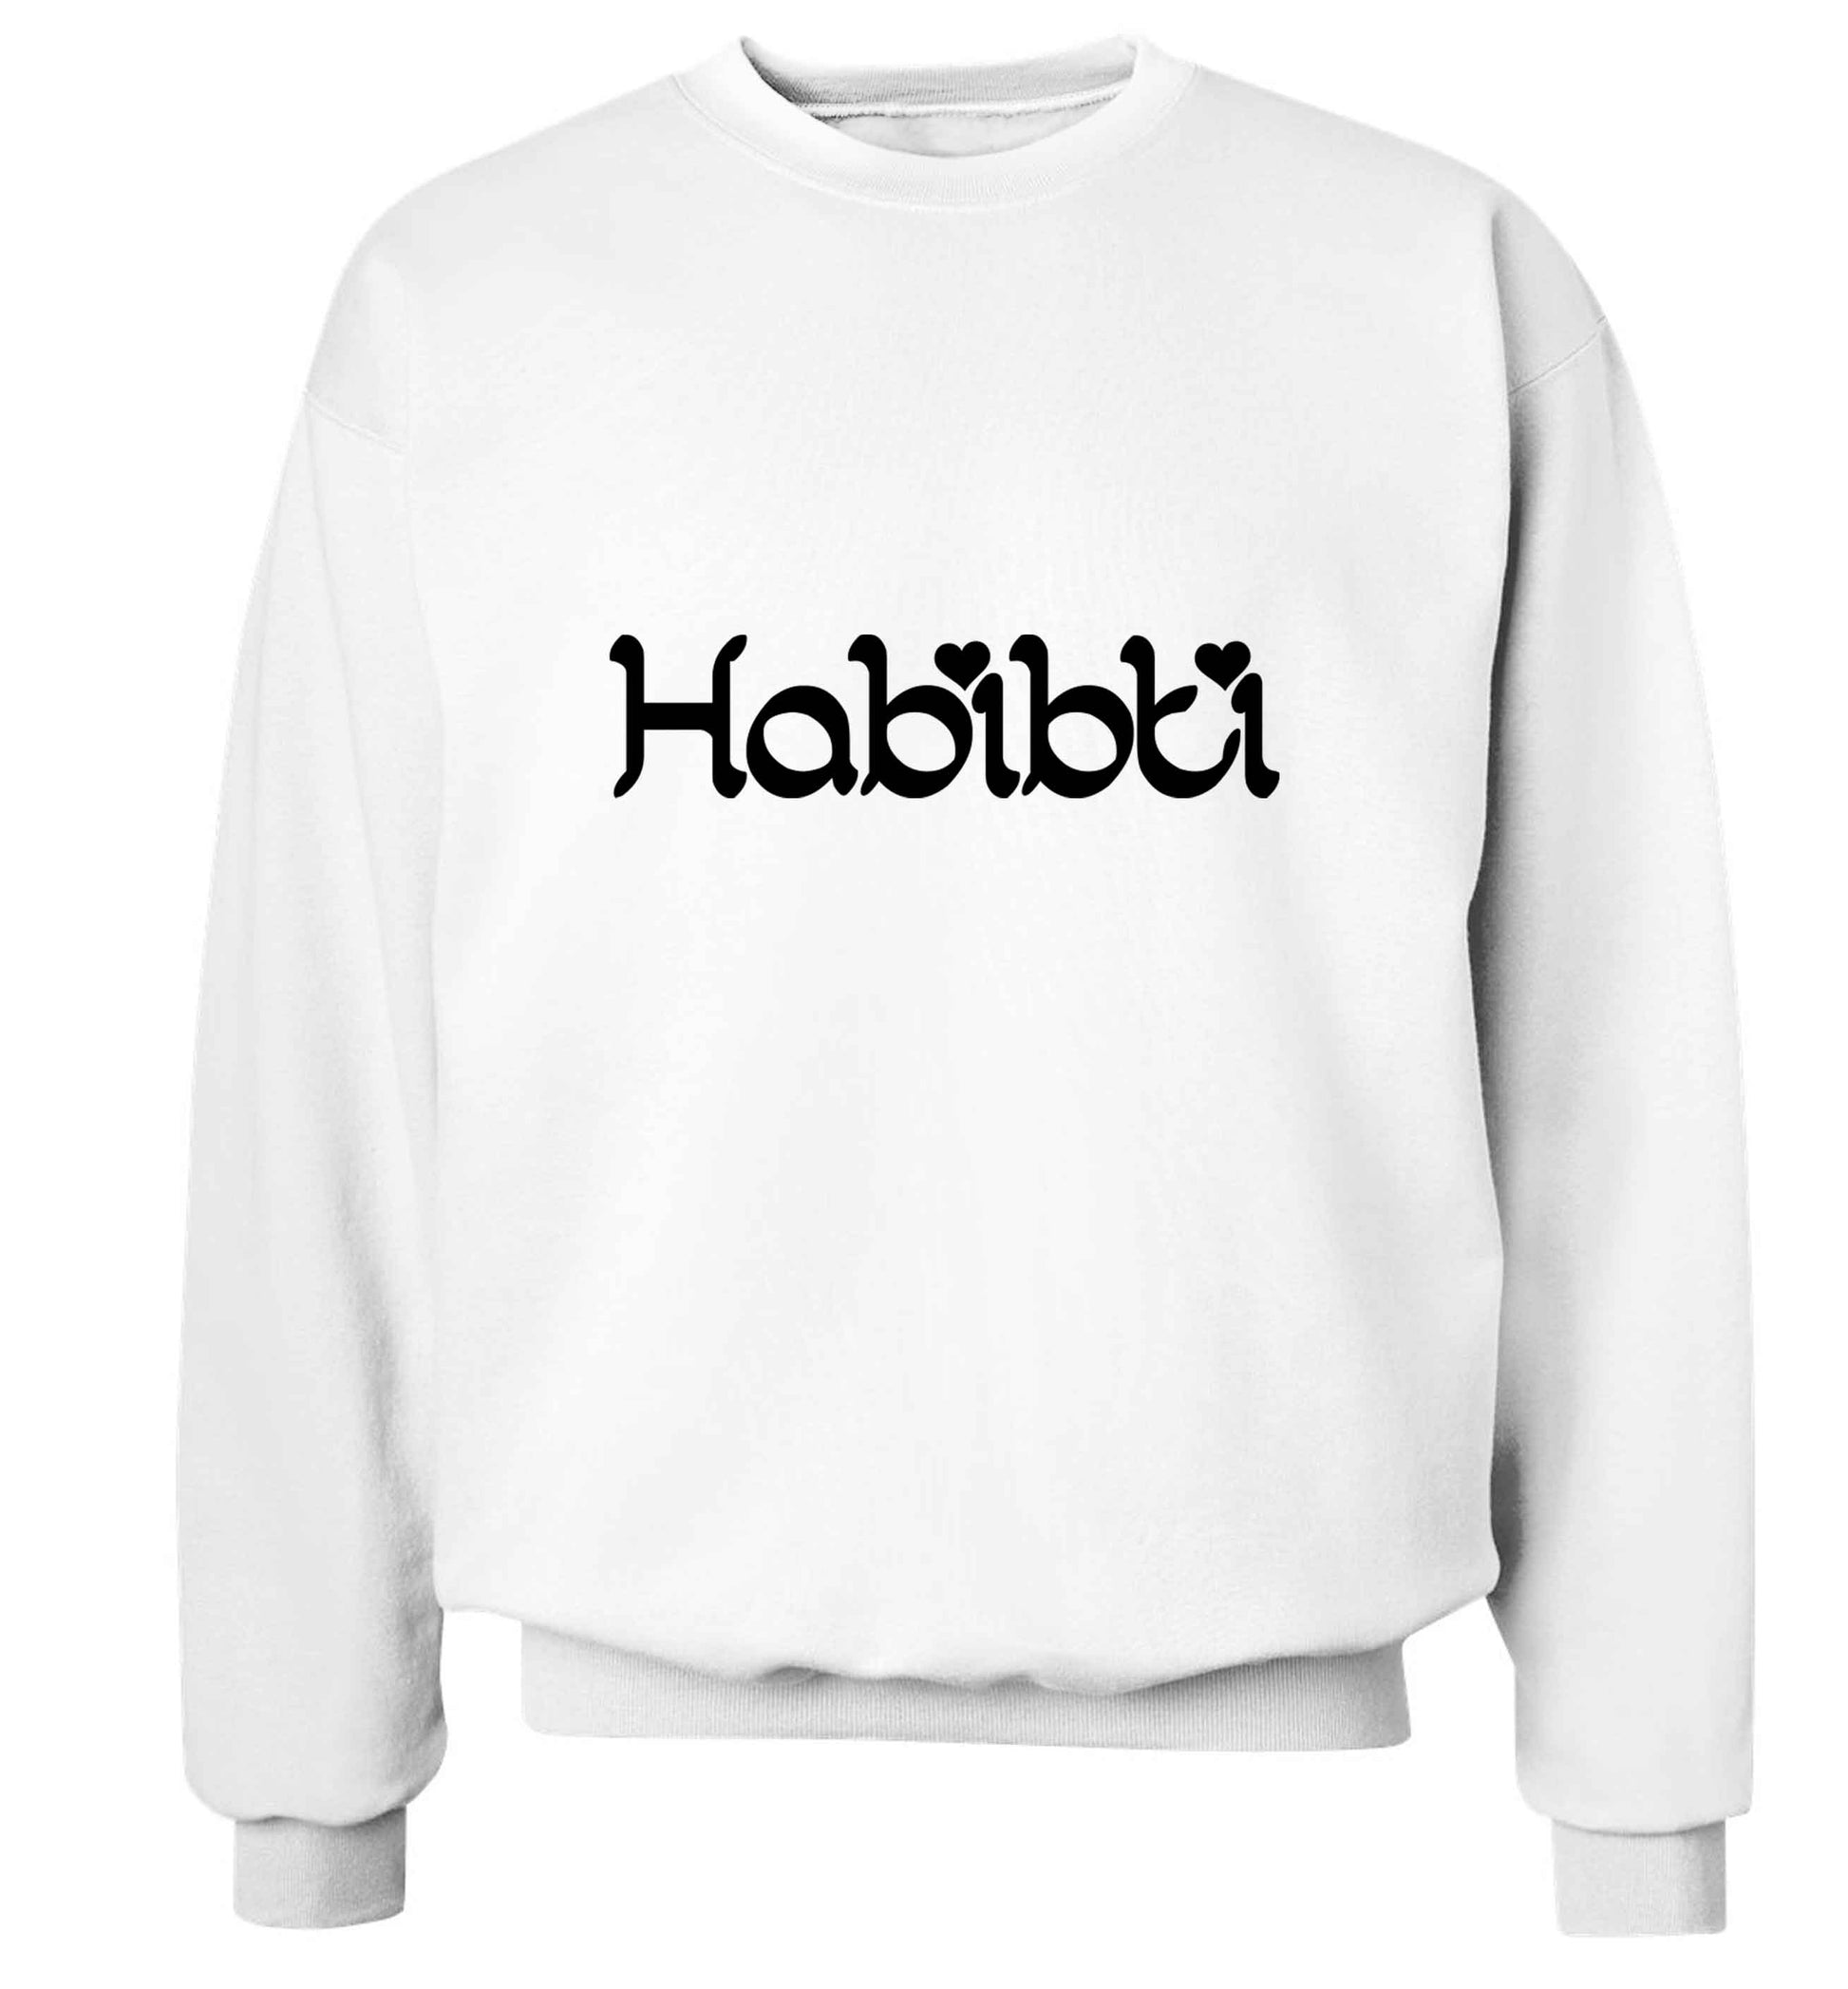 Habibiti adult's unisex white sweater 2XL